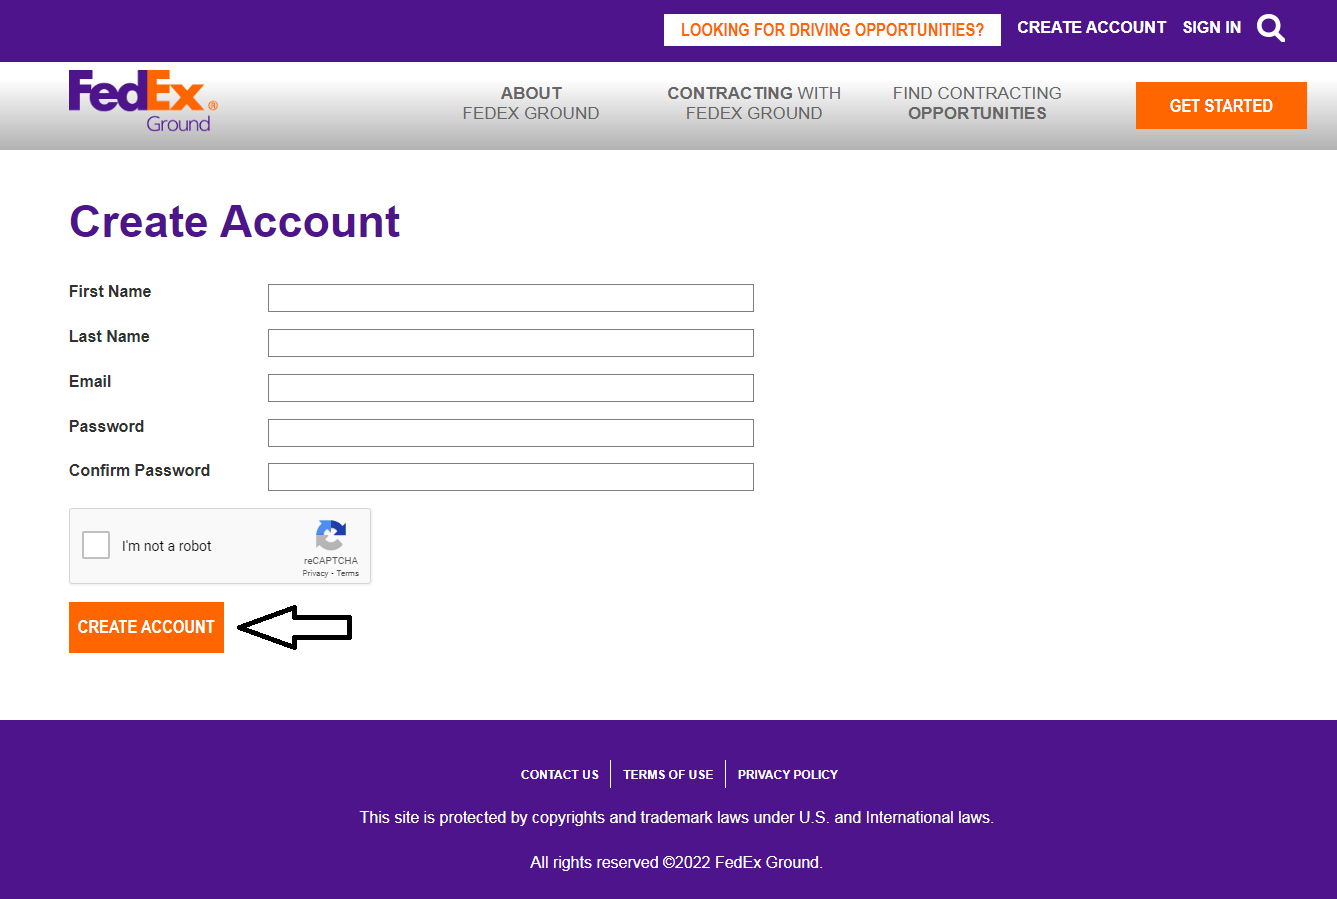 enter required details to create mygroundbizaccount